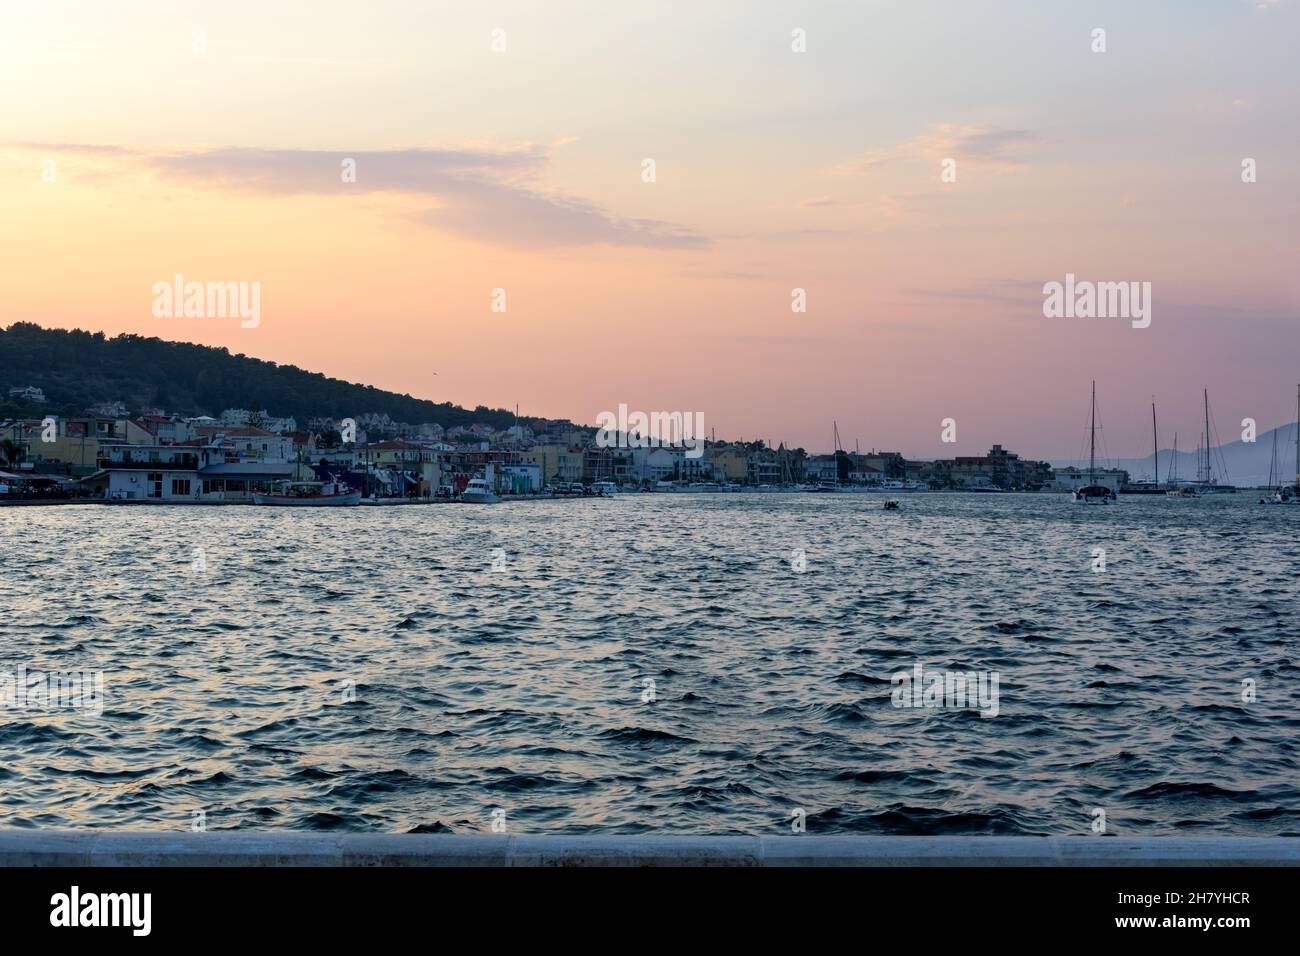 A calm sunset in Argostoli, Kefalonia, Greece Stock Photo